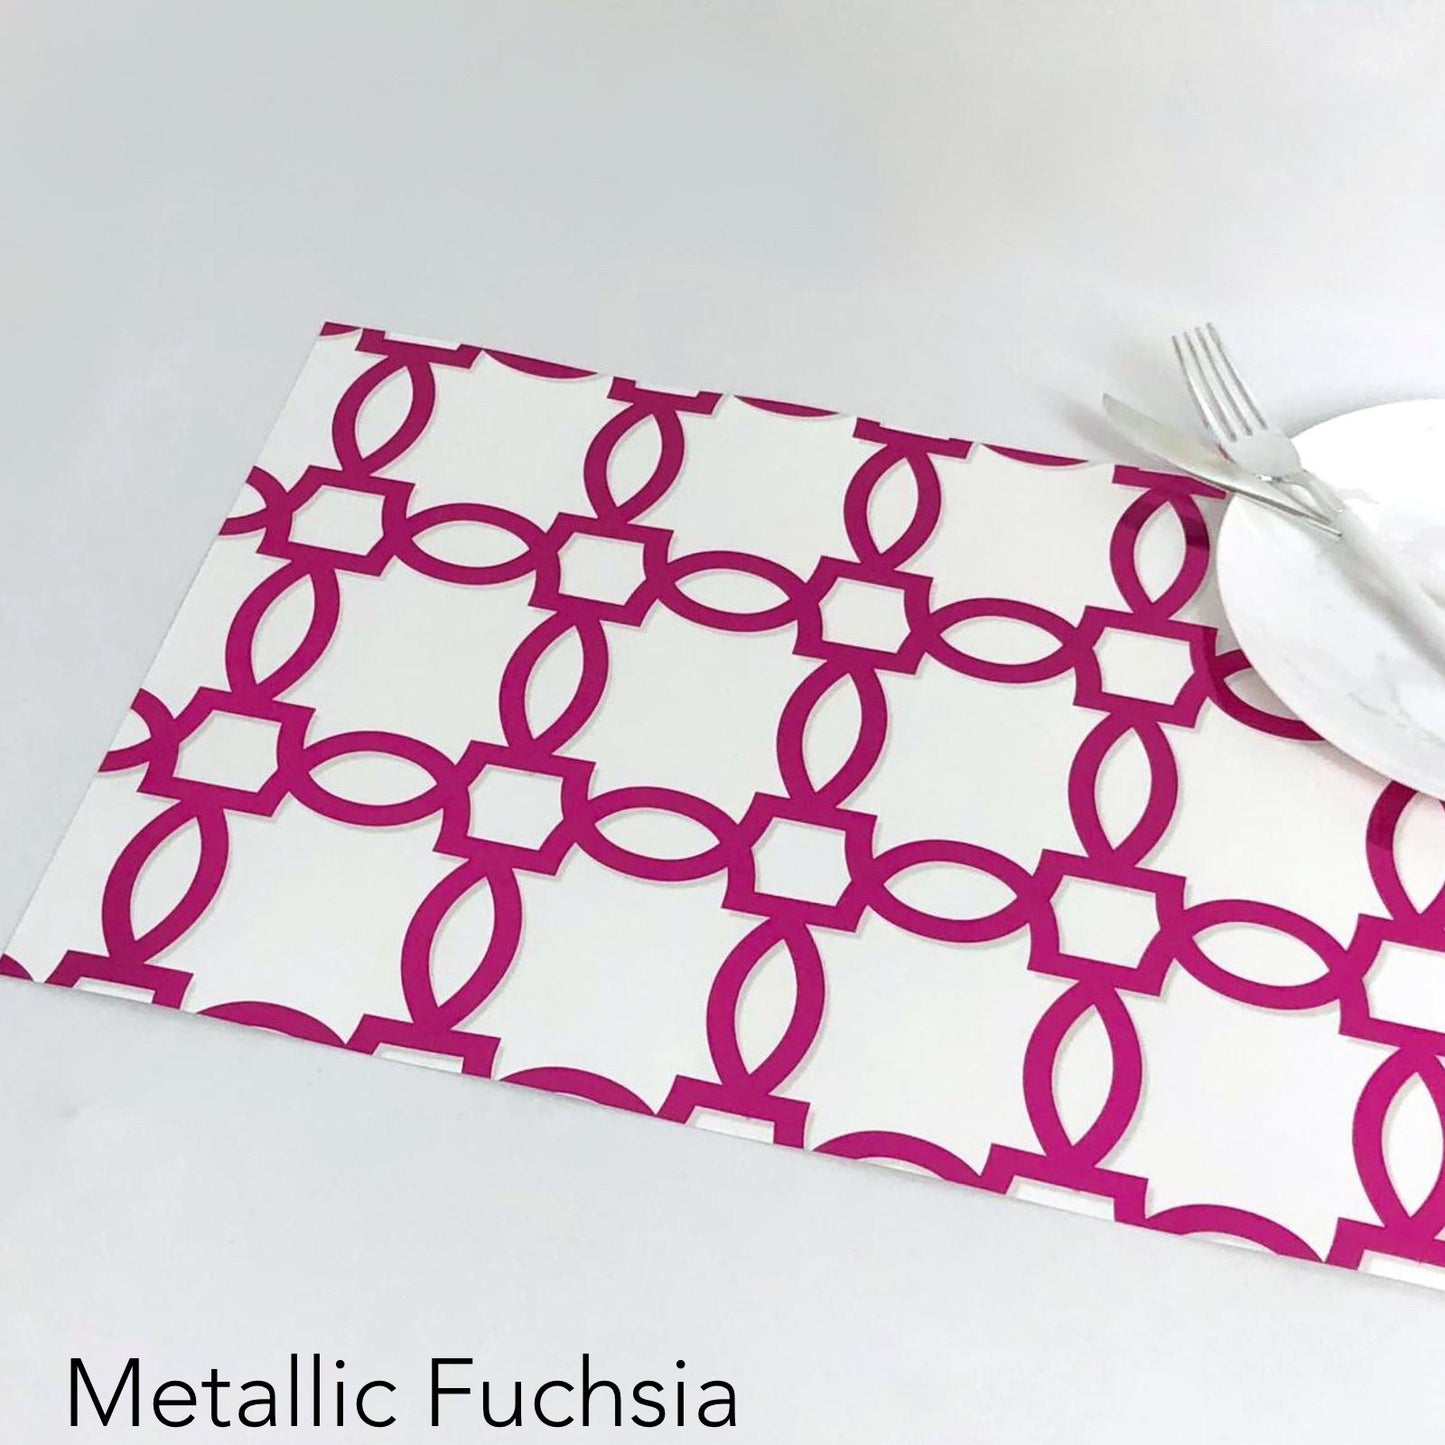 Foil Iron Links - Placemat